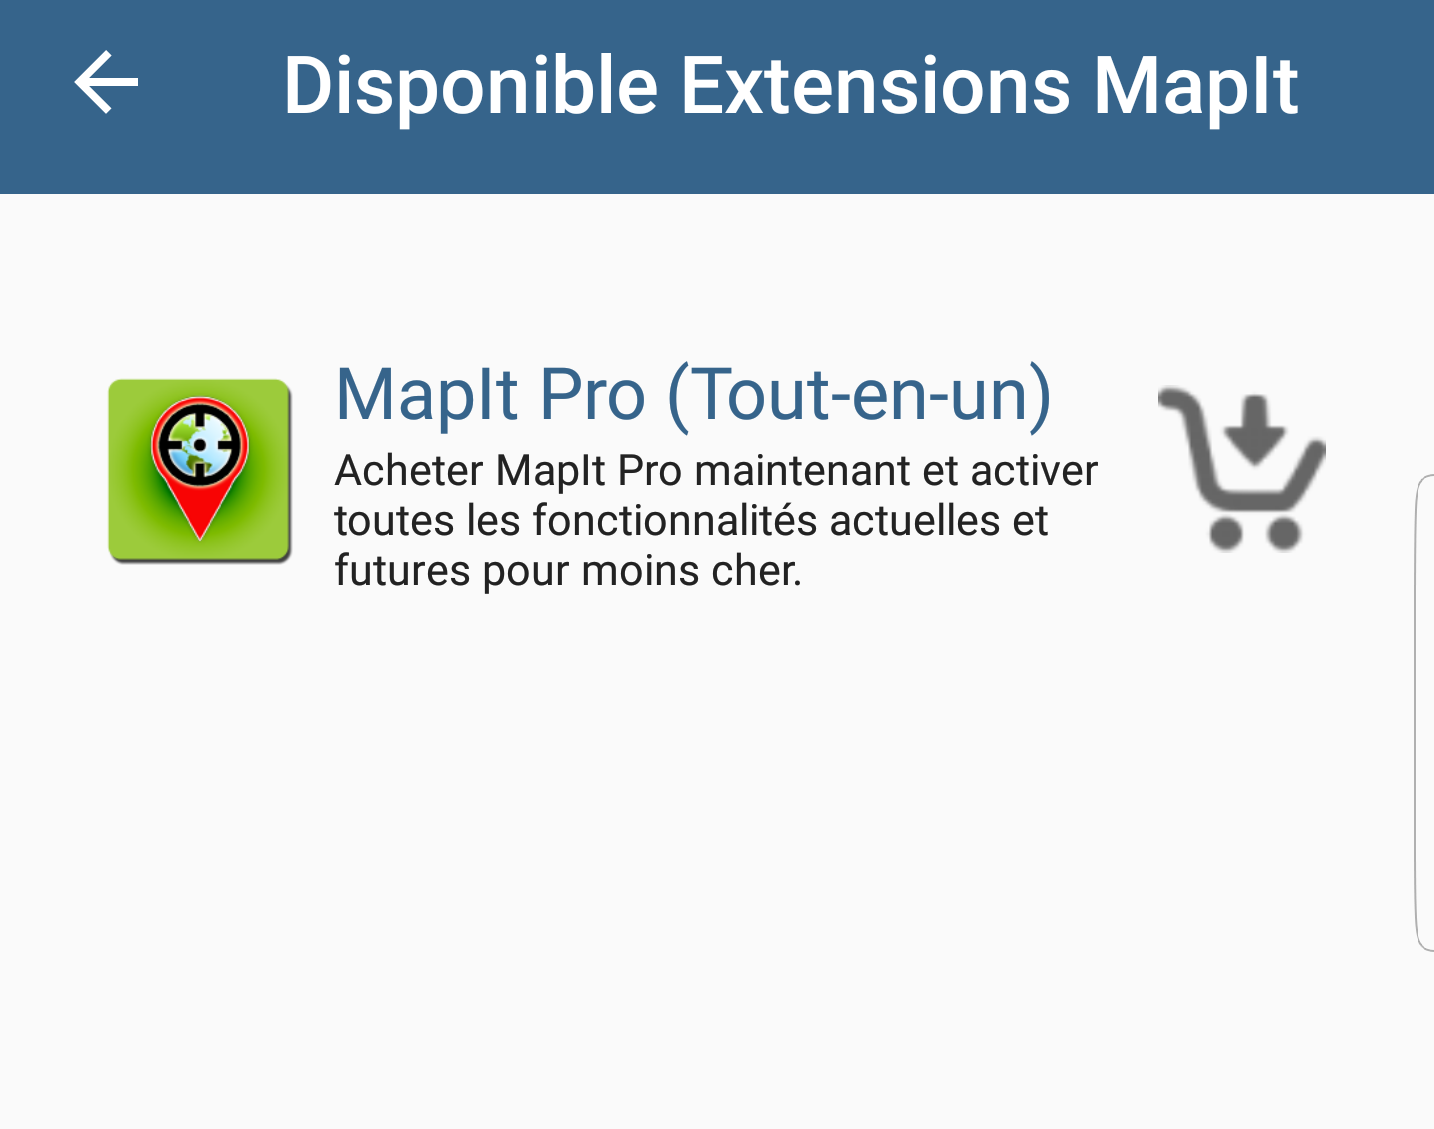 capture_extension_mapit_gis.png